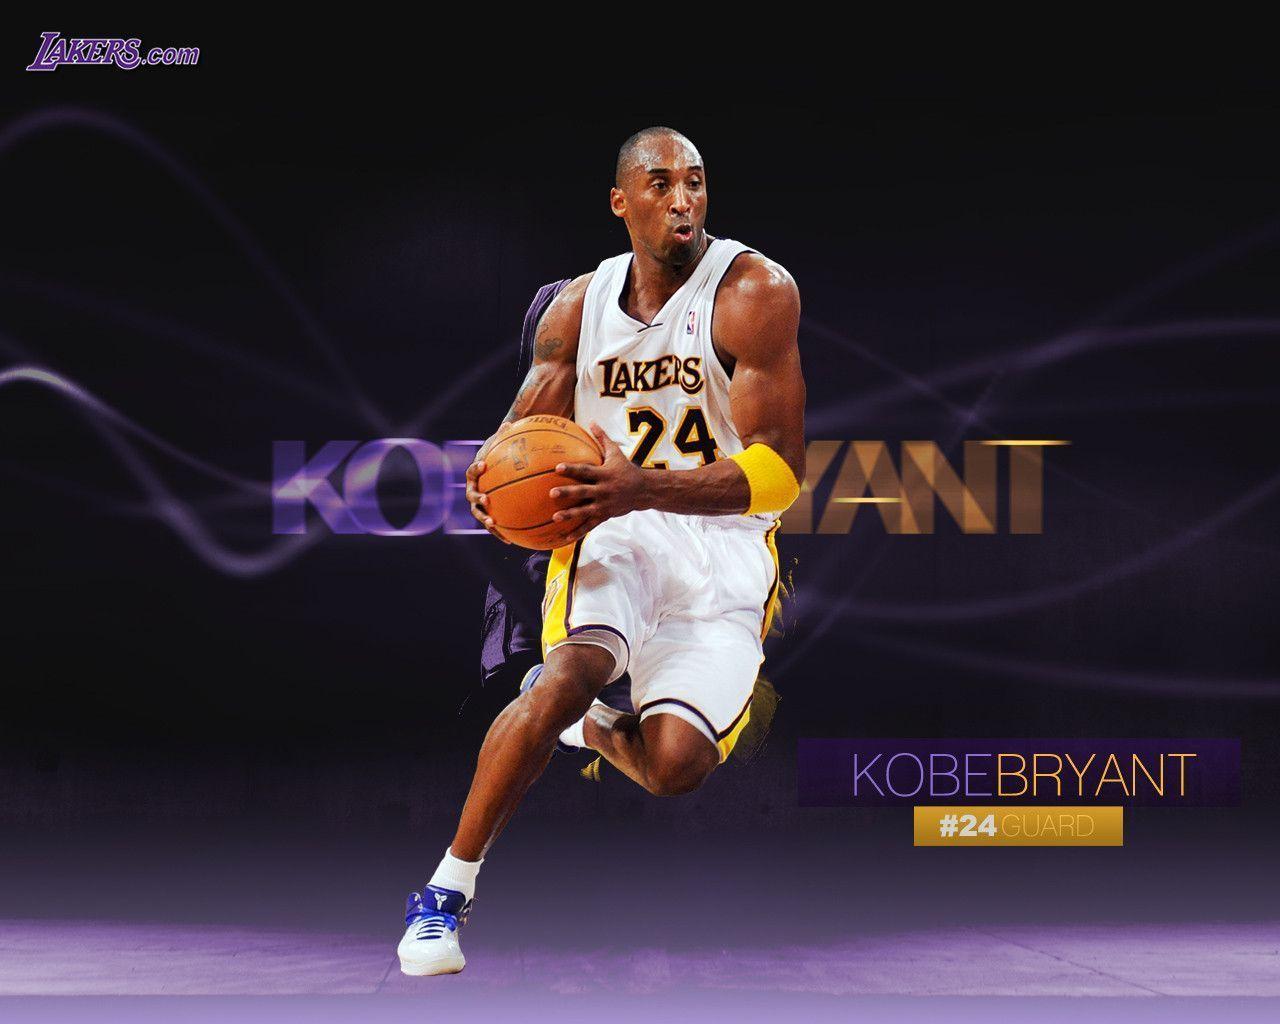 Basketball Wallpaper. Kobe Bryant Shoes Nike Wallpaper. Guemblung